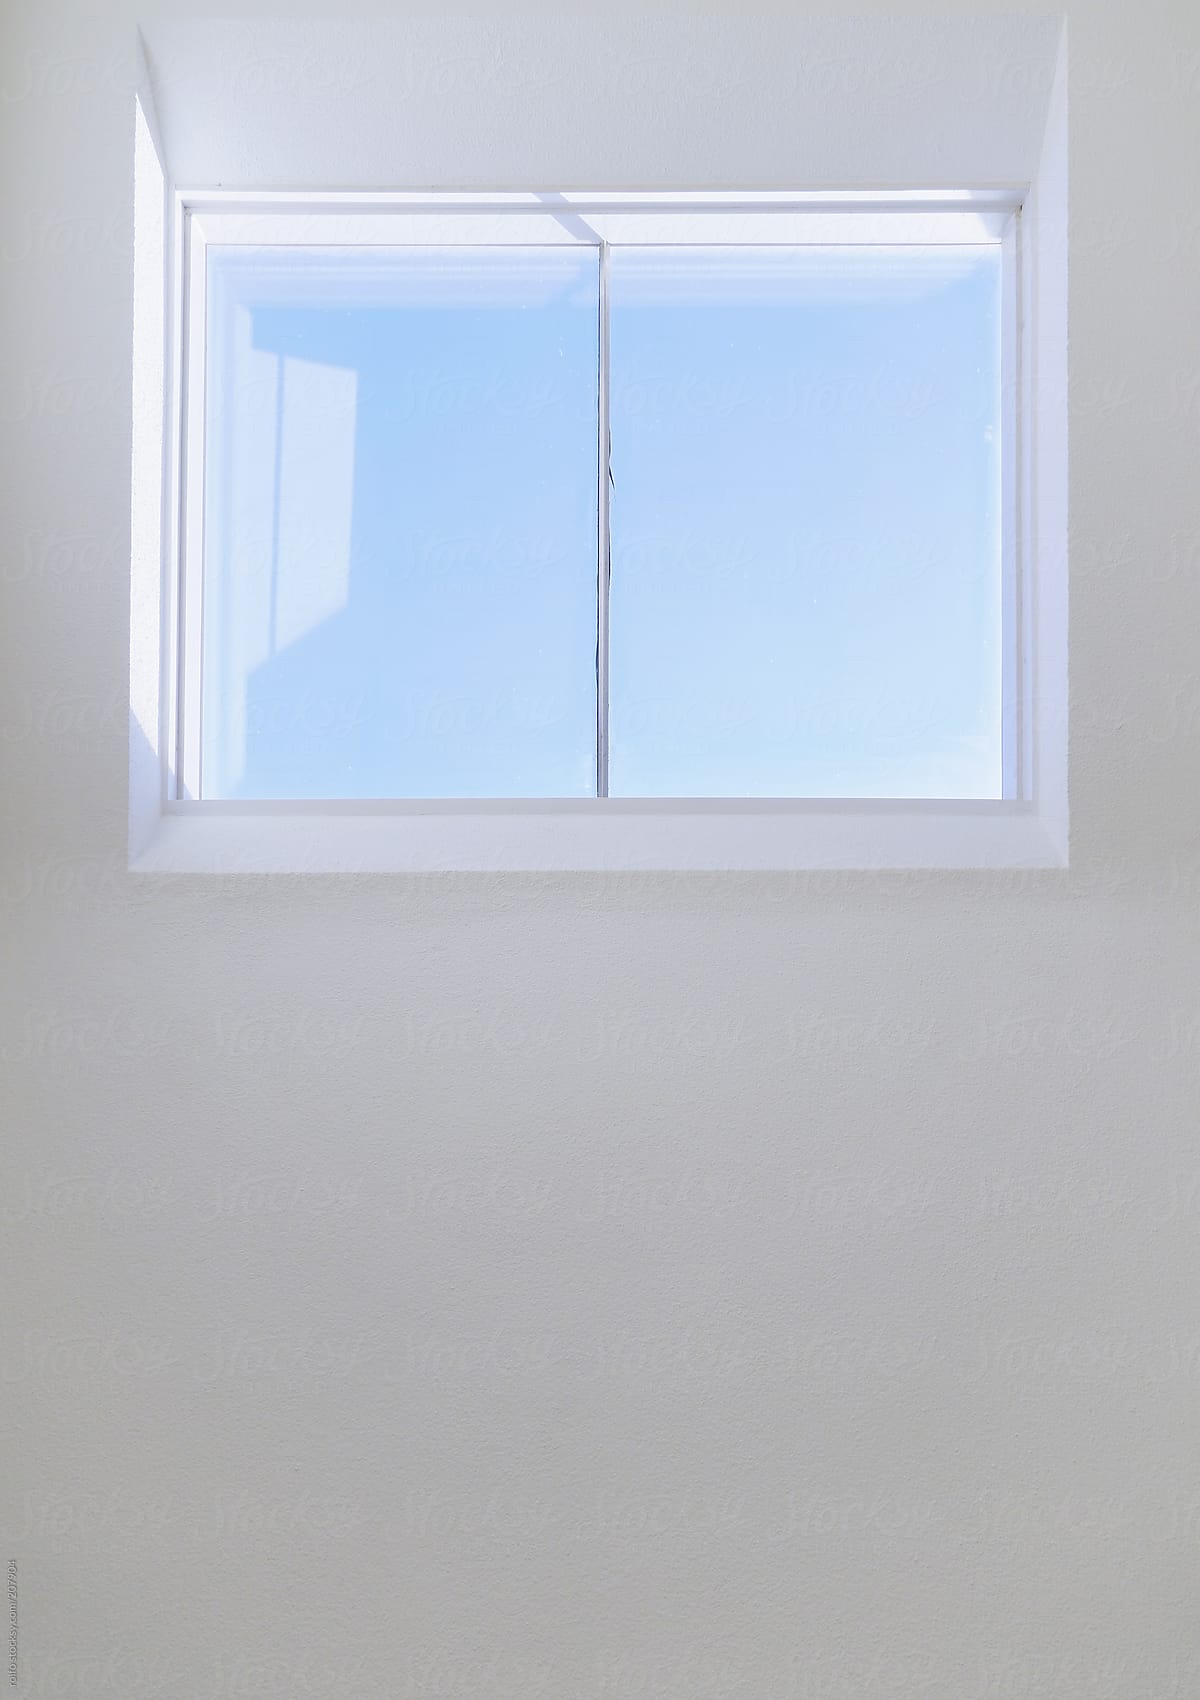 Clear blue sky through a glass window